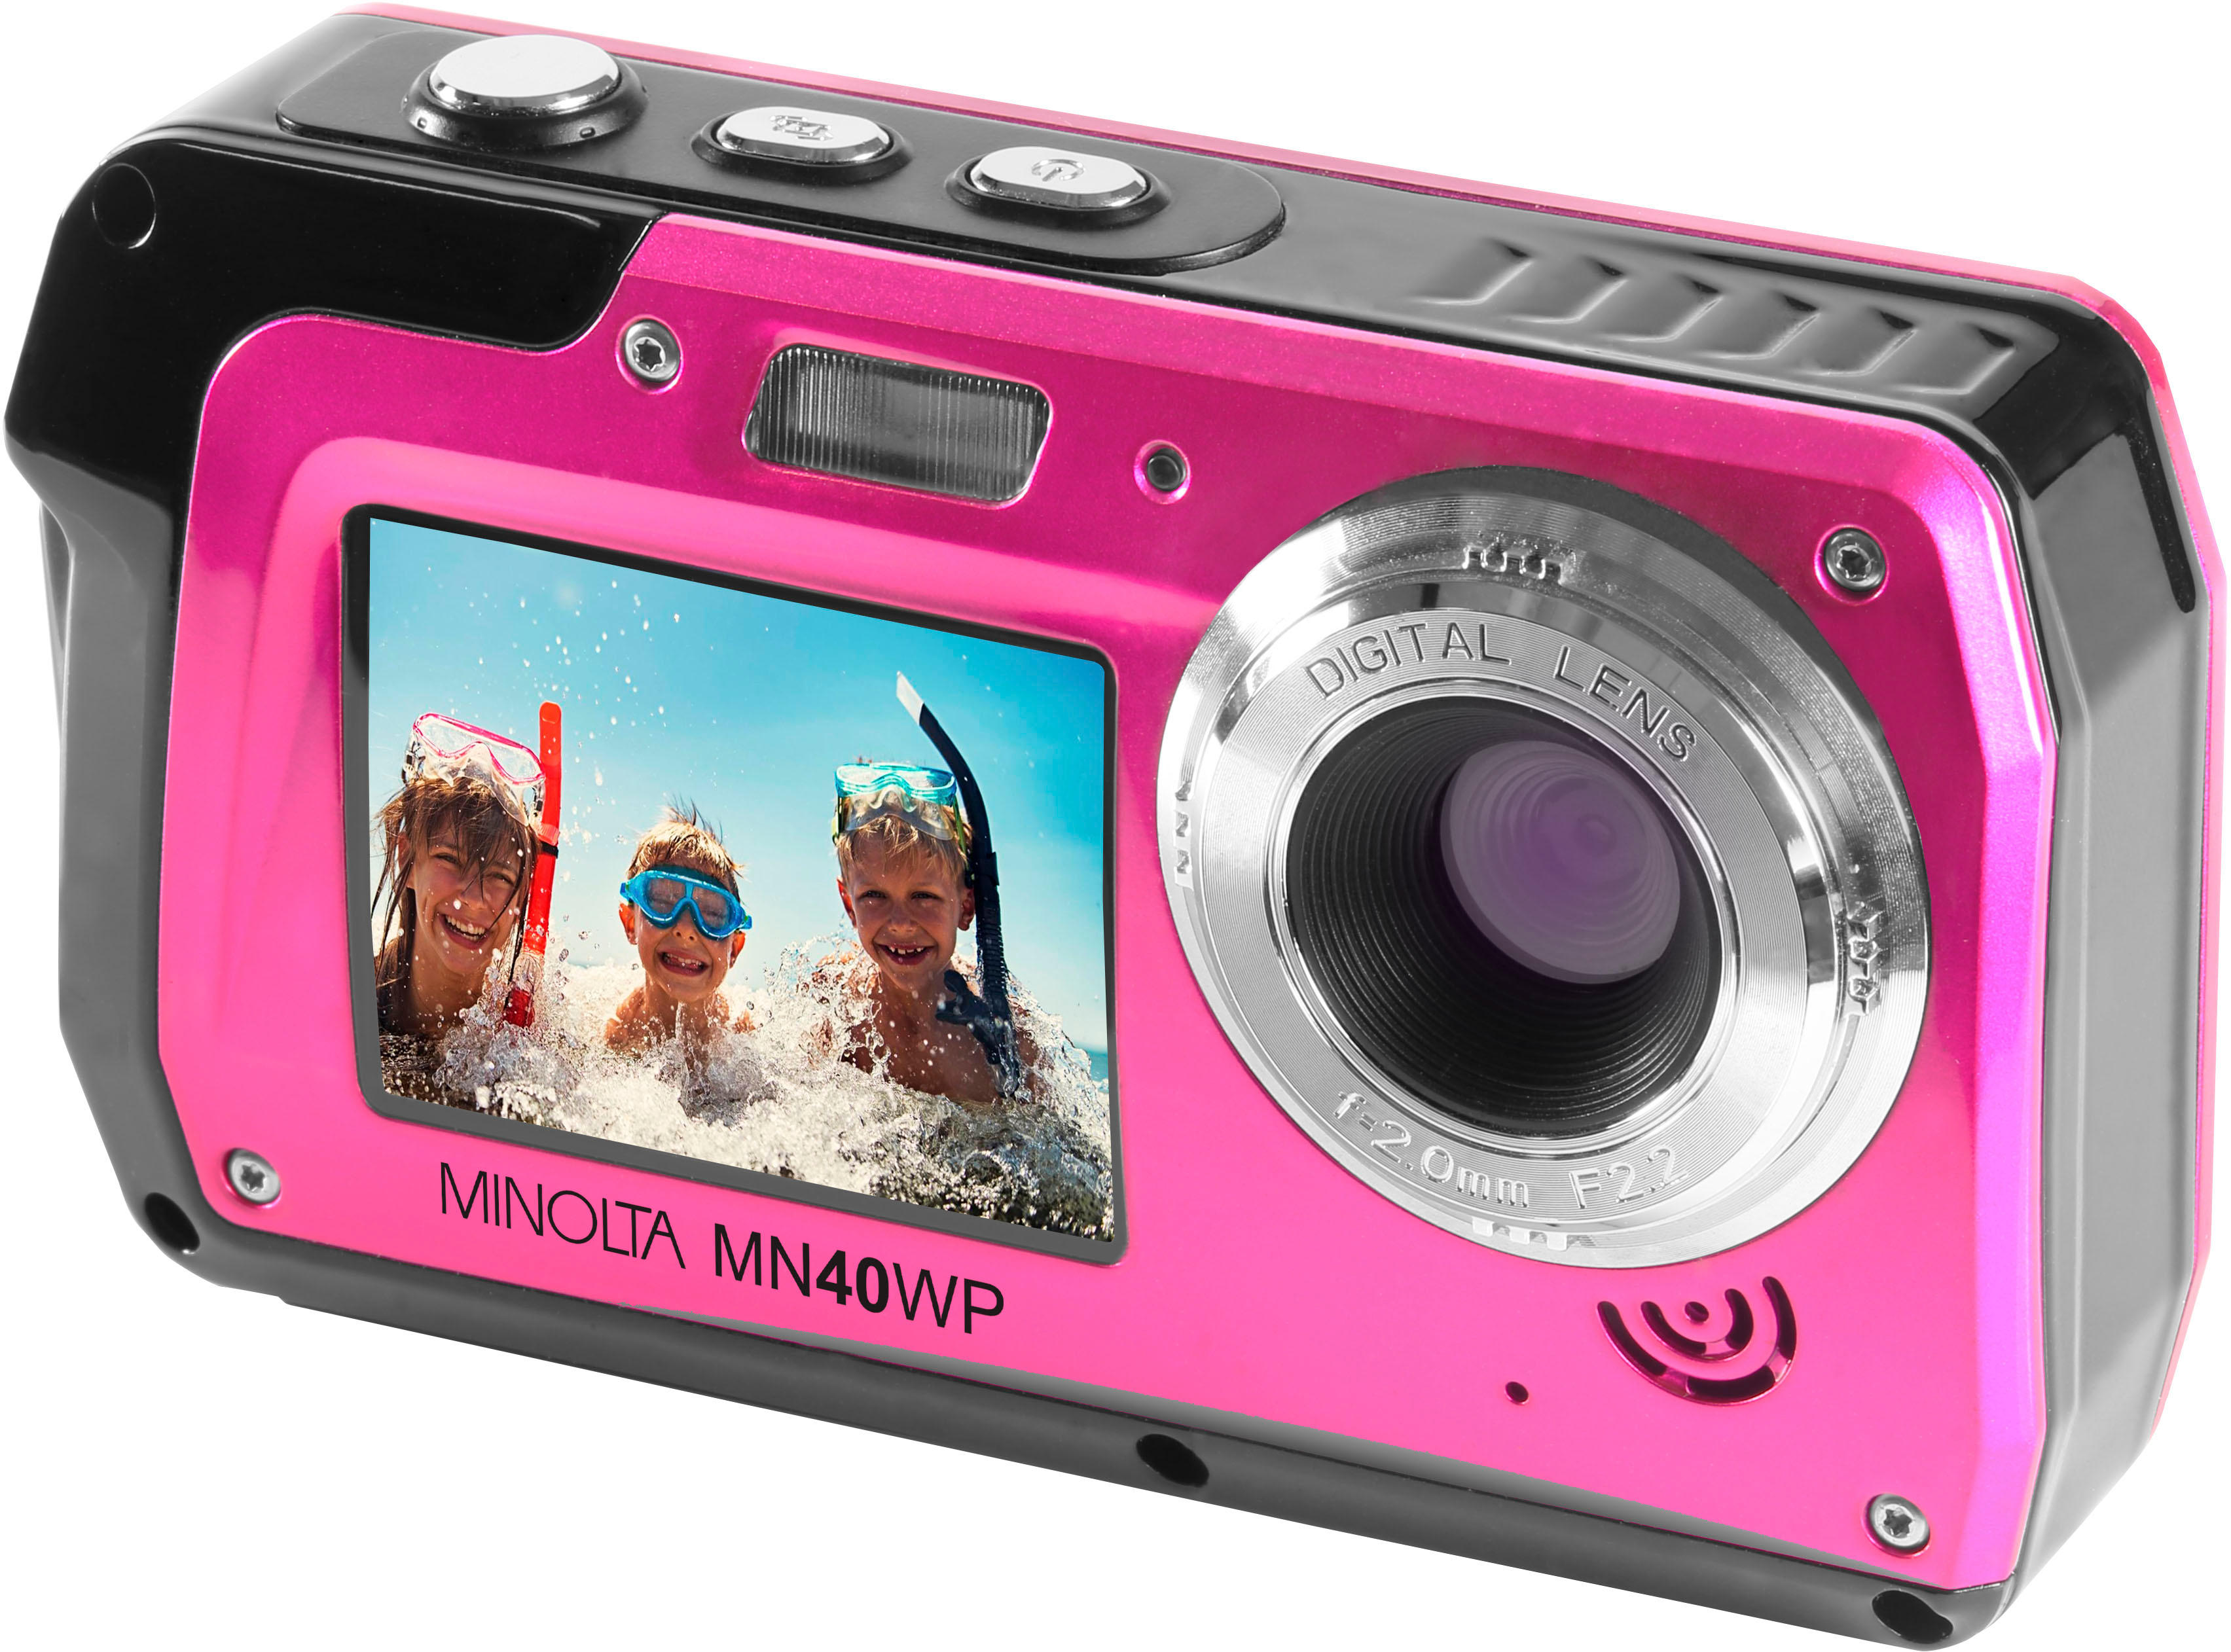 Angle View: Minolta - MN40WP 48.0 Megapixel Waterproof Digital Camera - Pink